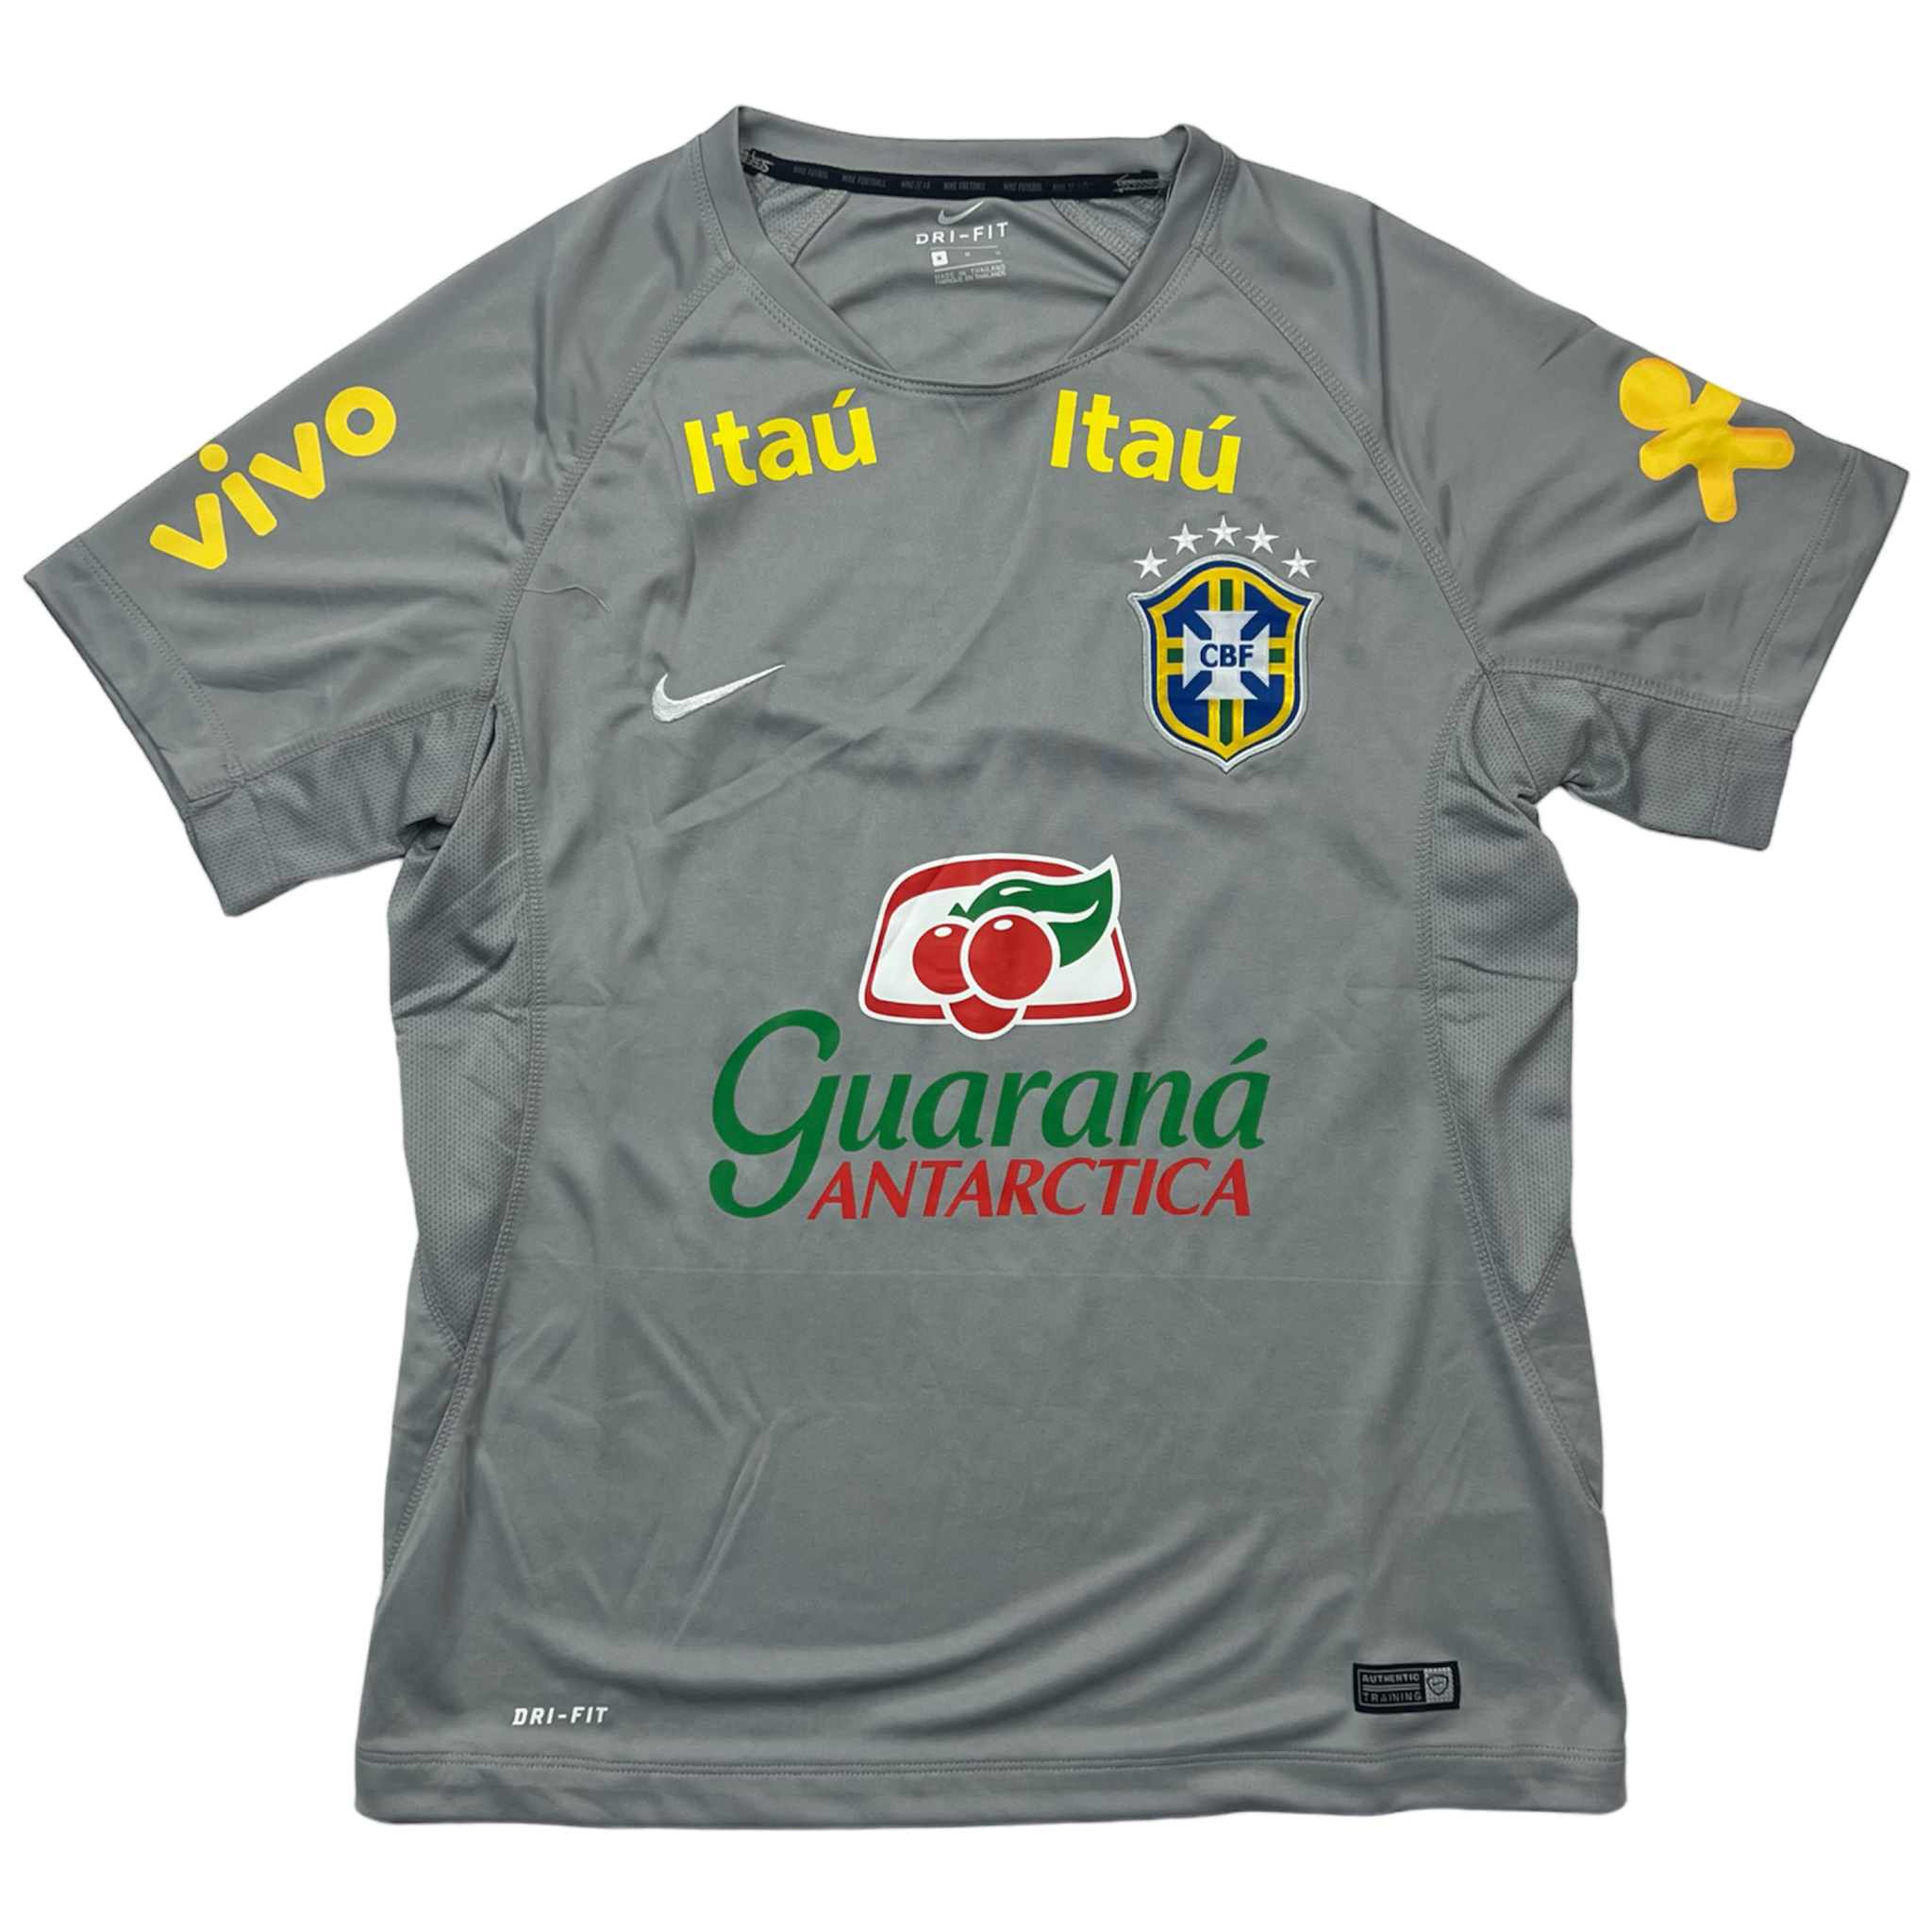 Nike Brazil Jersey (M)